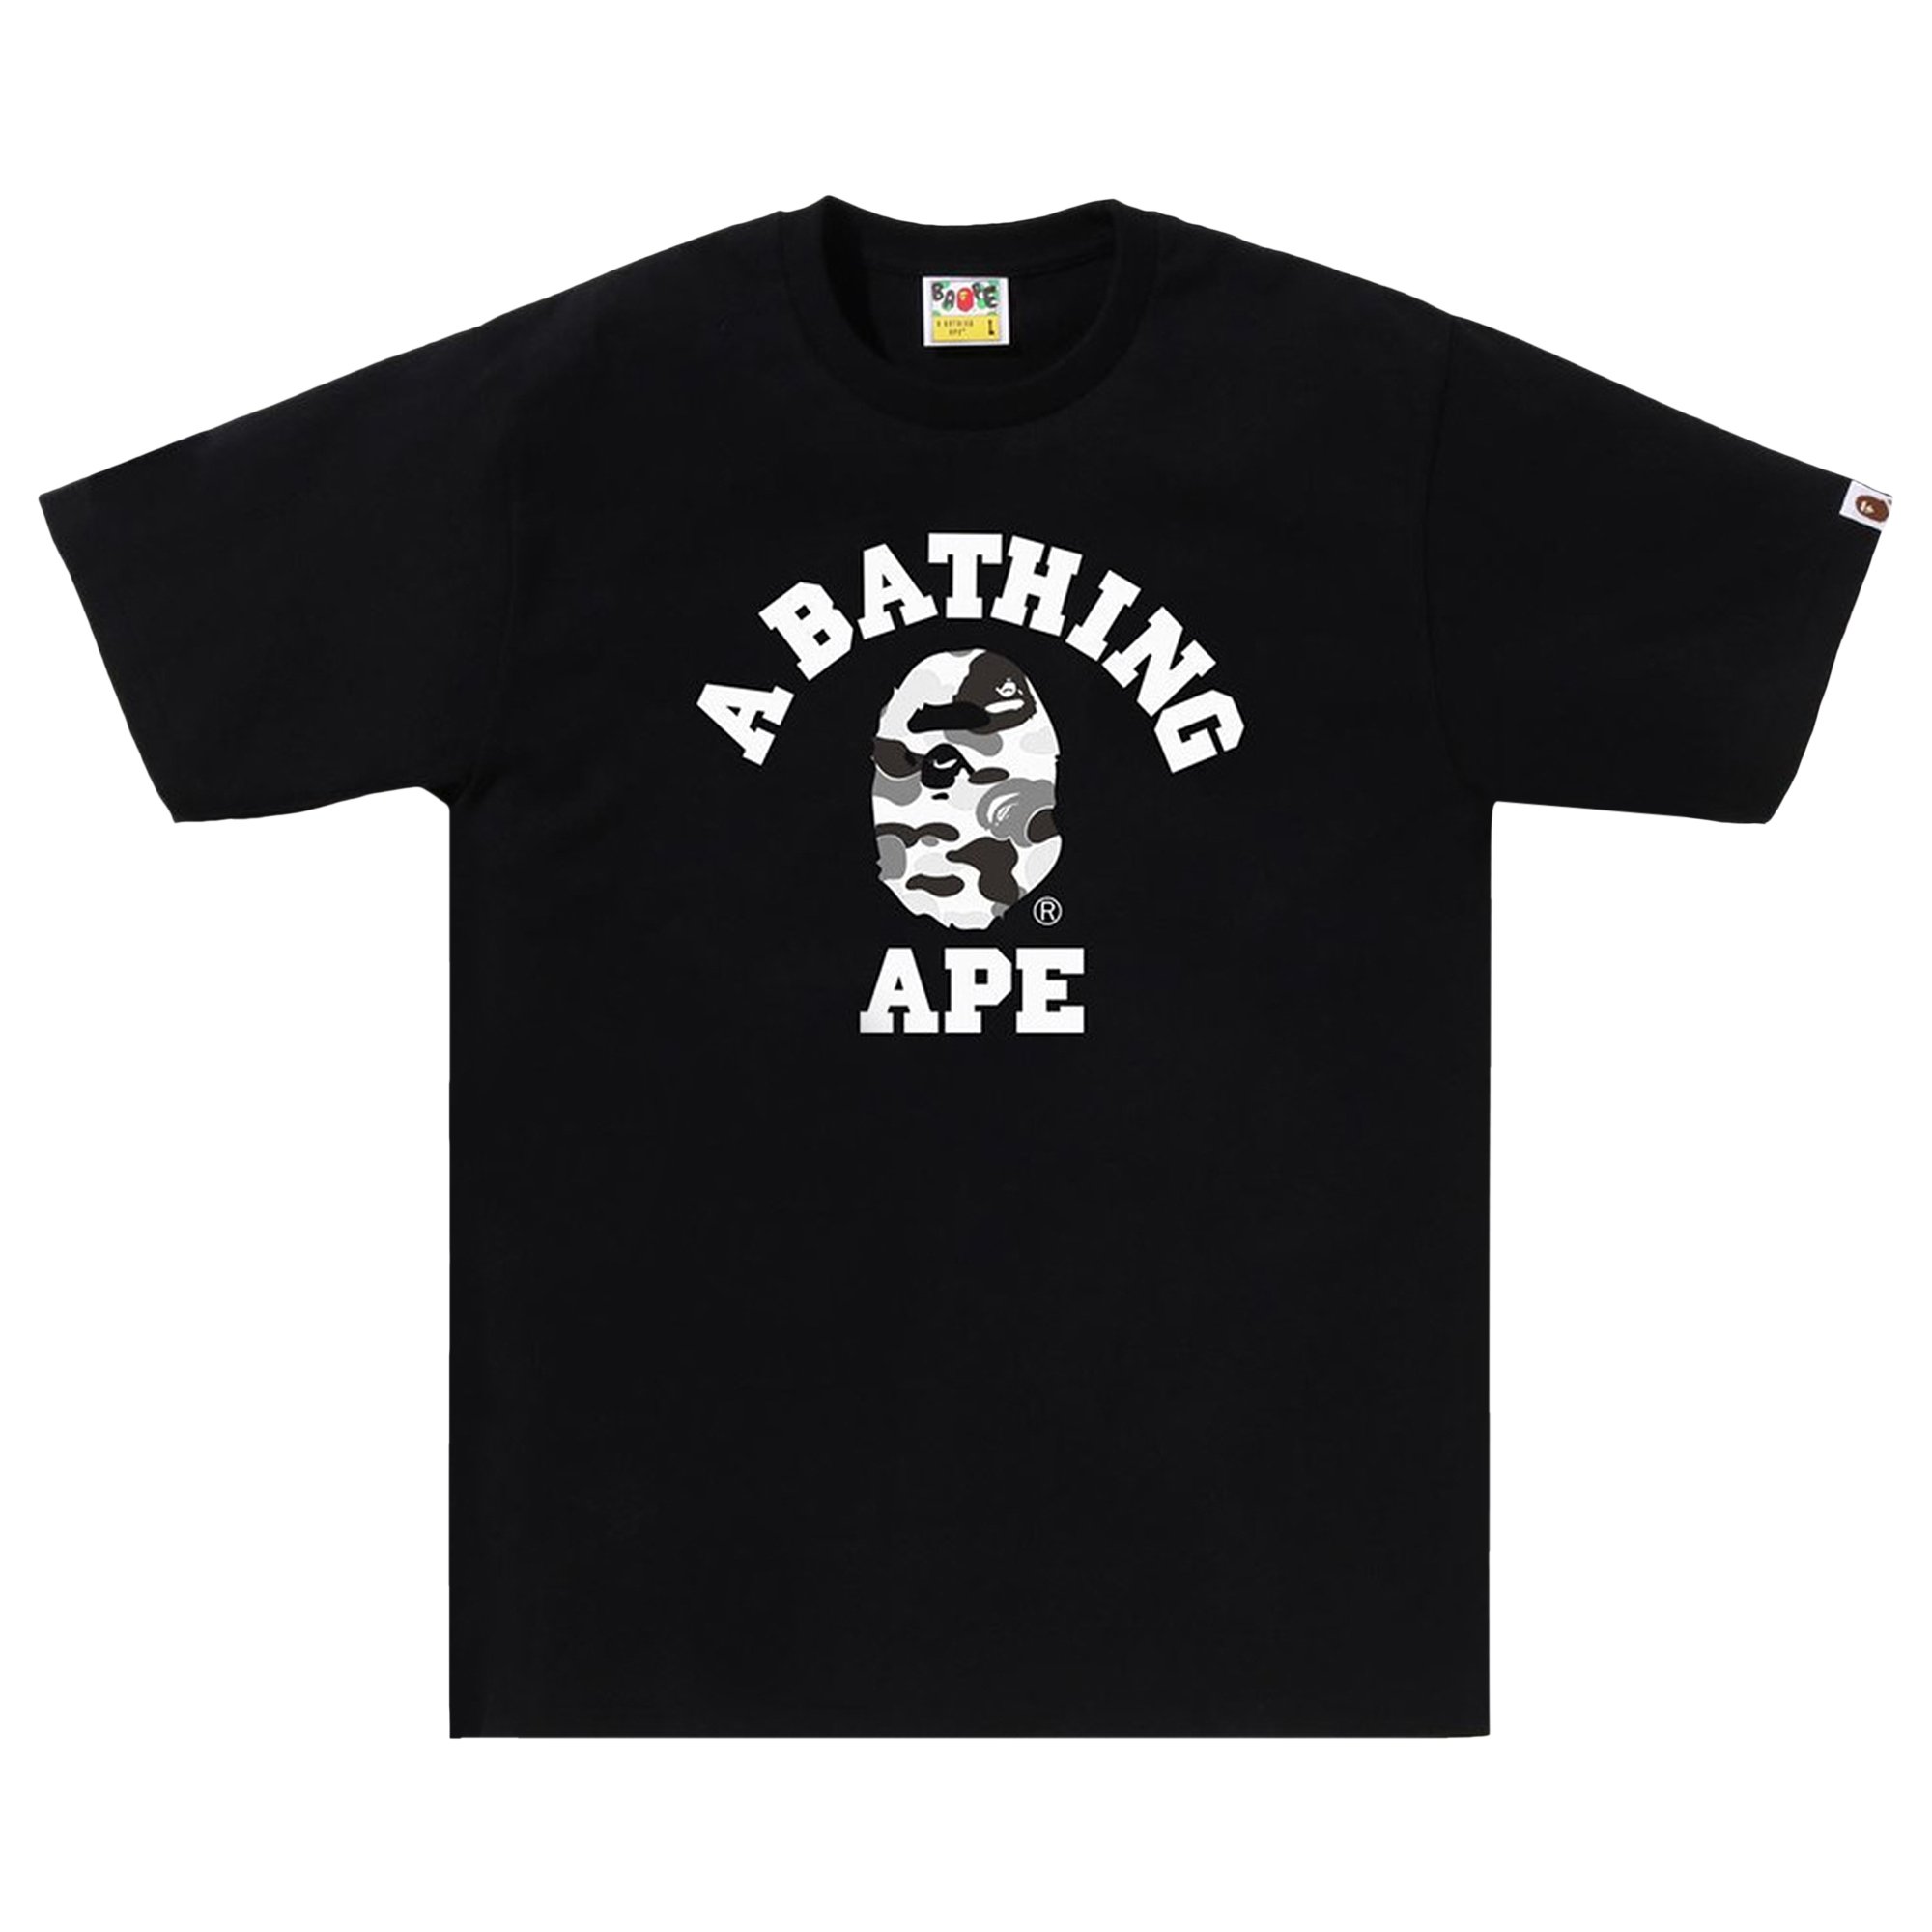 Камуфляжная футболка BAPE ABC Черный/Серый